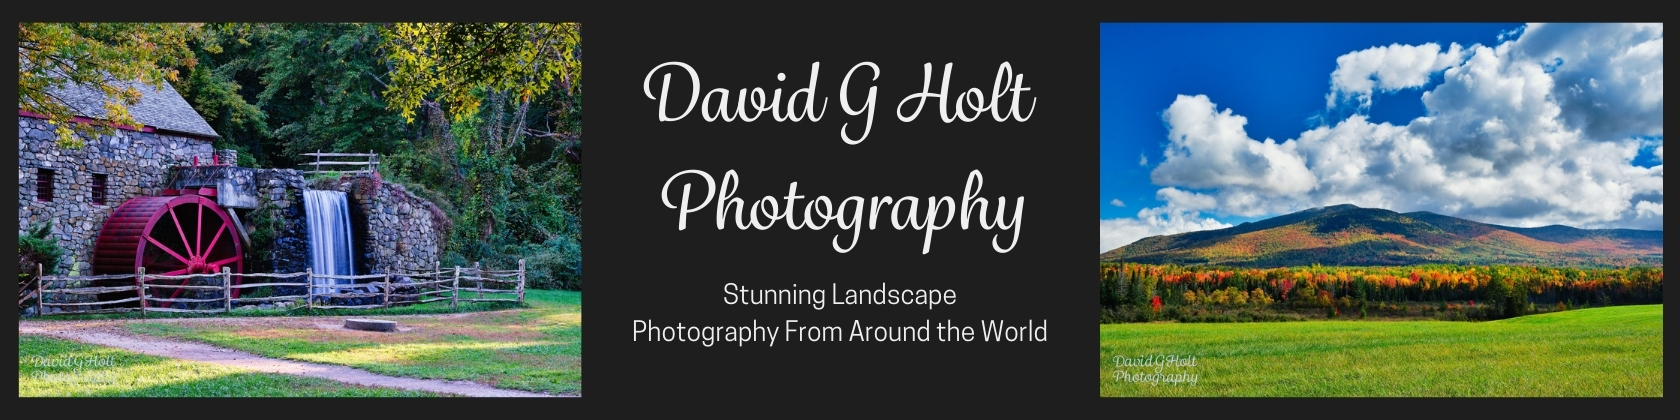 David G Holt Photography